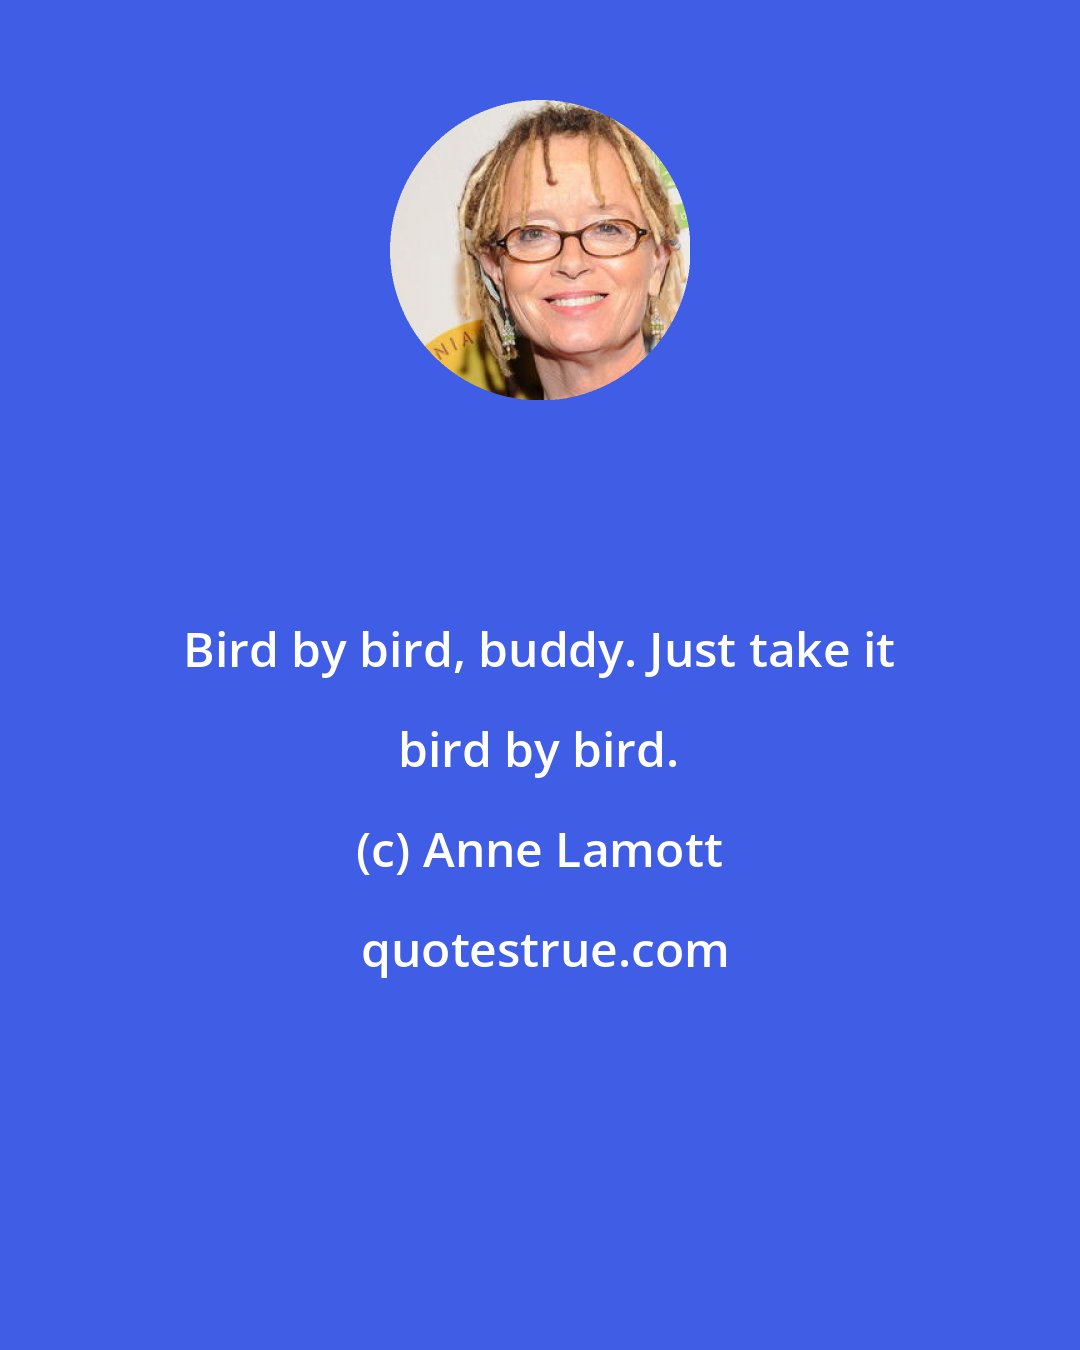 Anne Lamott: Bird by bird, buddy. Just take it bird by bird.